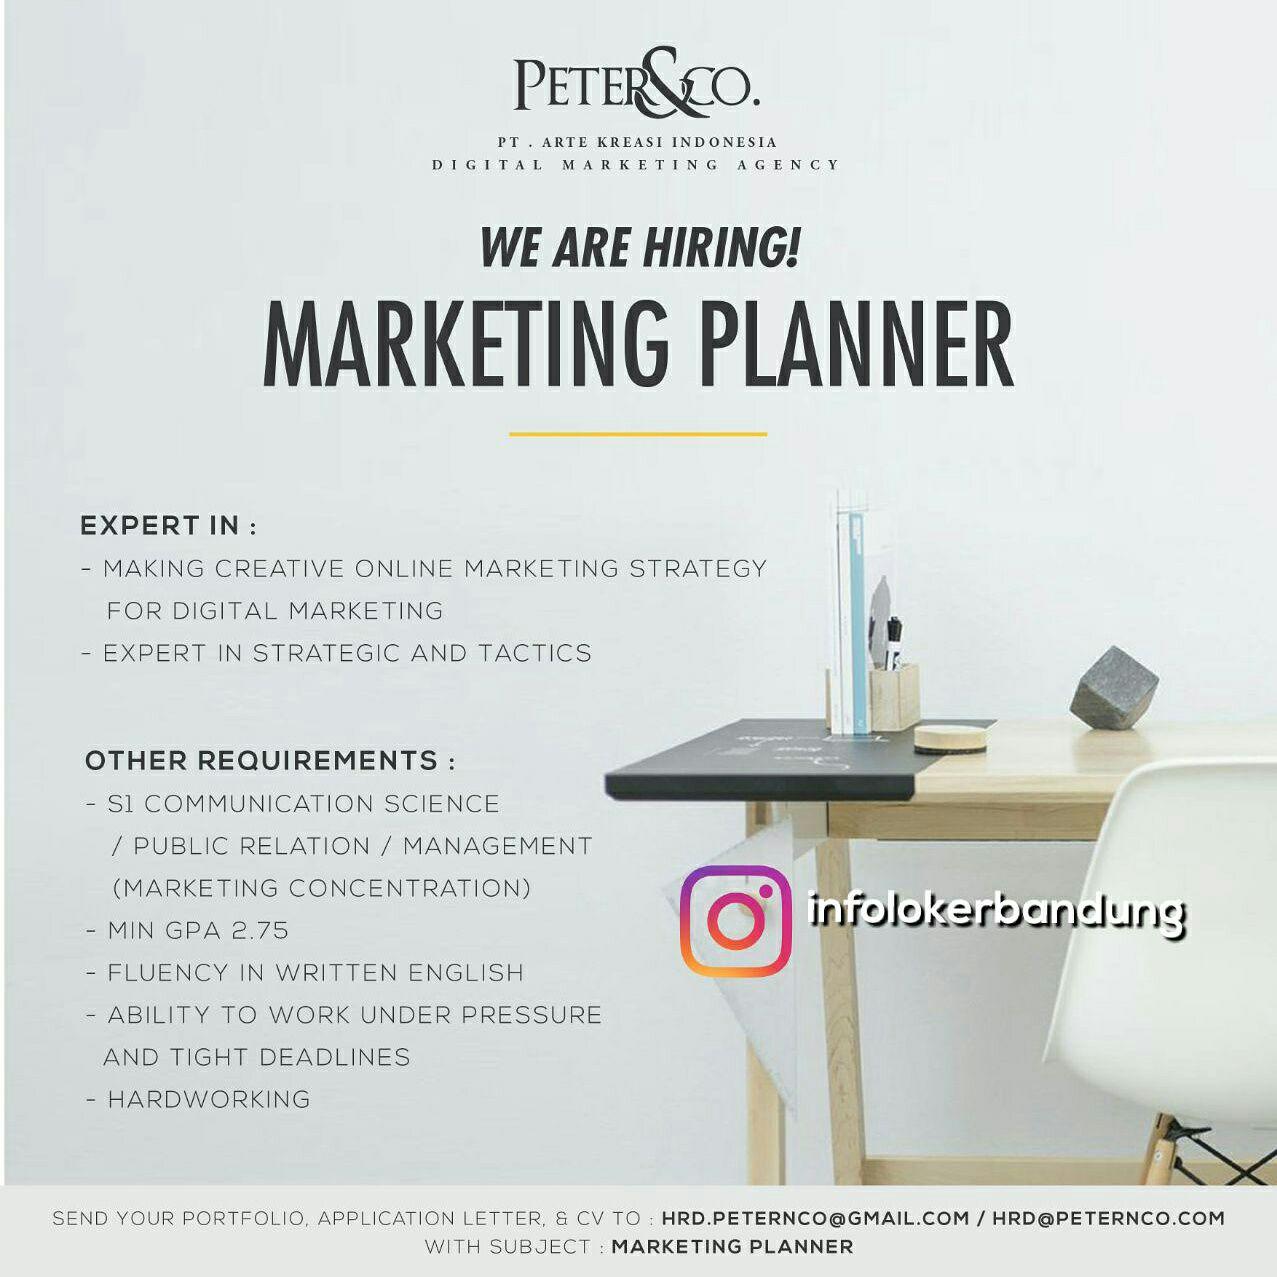 Lowongan Kerja Marketing Planner PT. Arte Kreasi Indoensia ( Peter&Co) September 2017